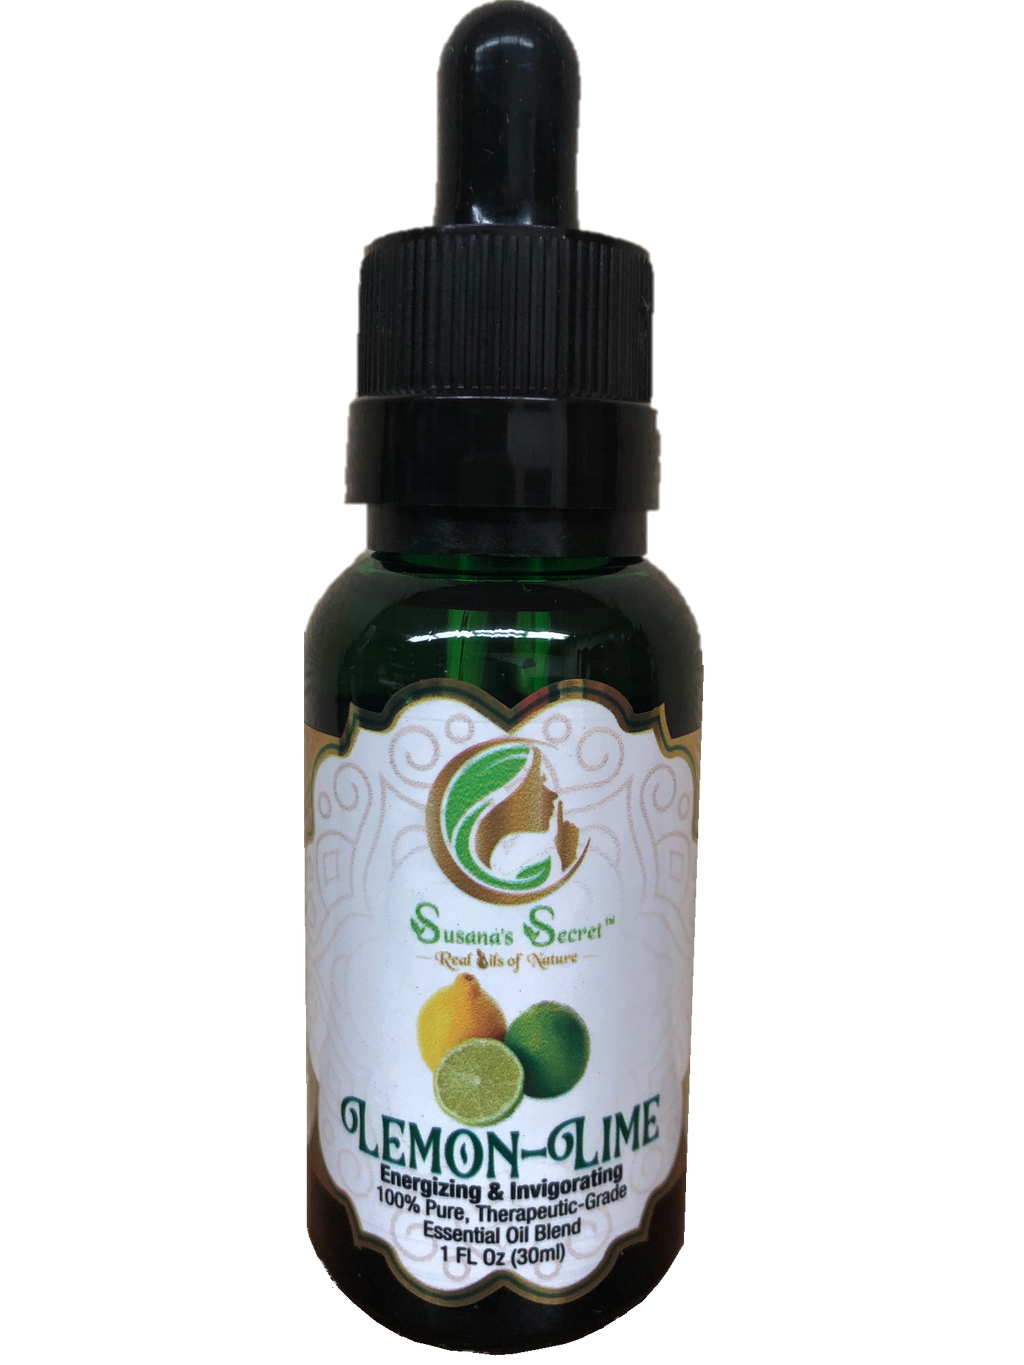 "LEMON-LIME"- Energizing & Invigorating- Essential Oil Blend- 100% PURE, Therapeutic-Grade, 1 FL Oz/30 ml- Glass bottle w/ dropper pipette